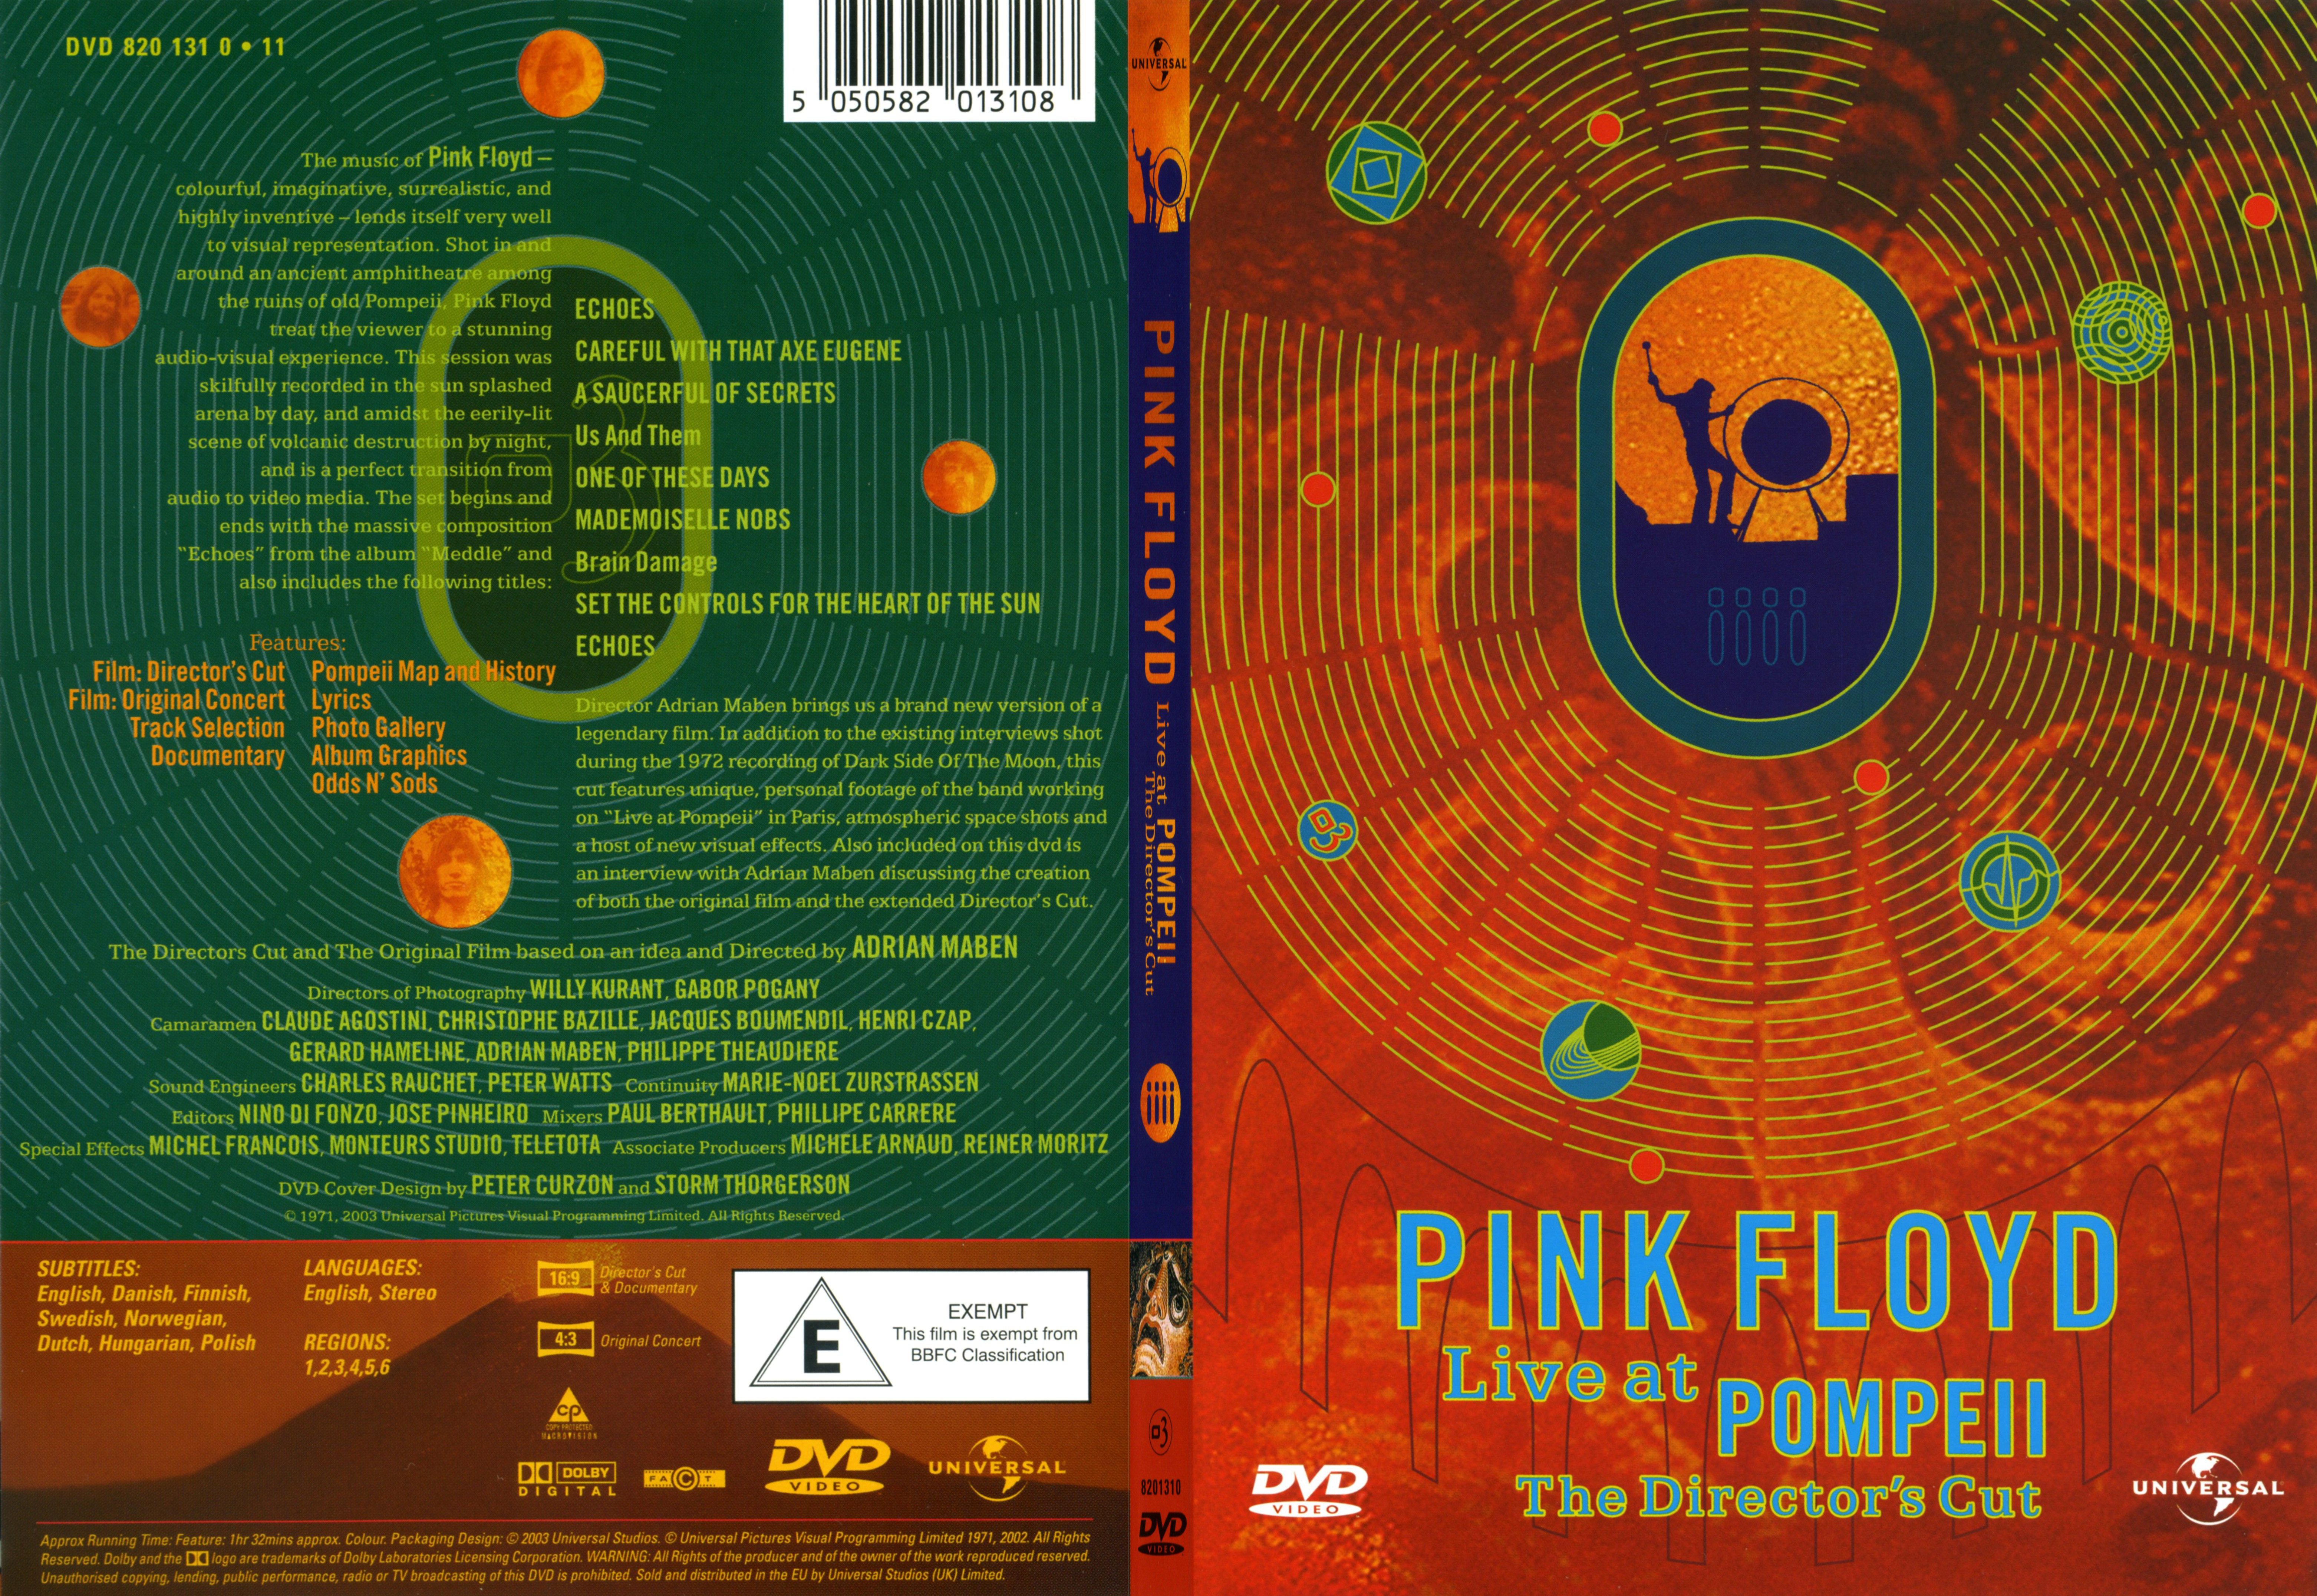 Jaquette DVD Pink Floyd Live at pompei - SLIM